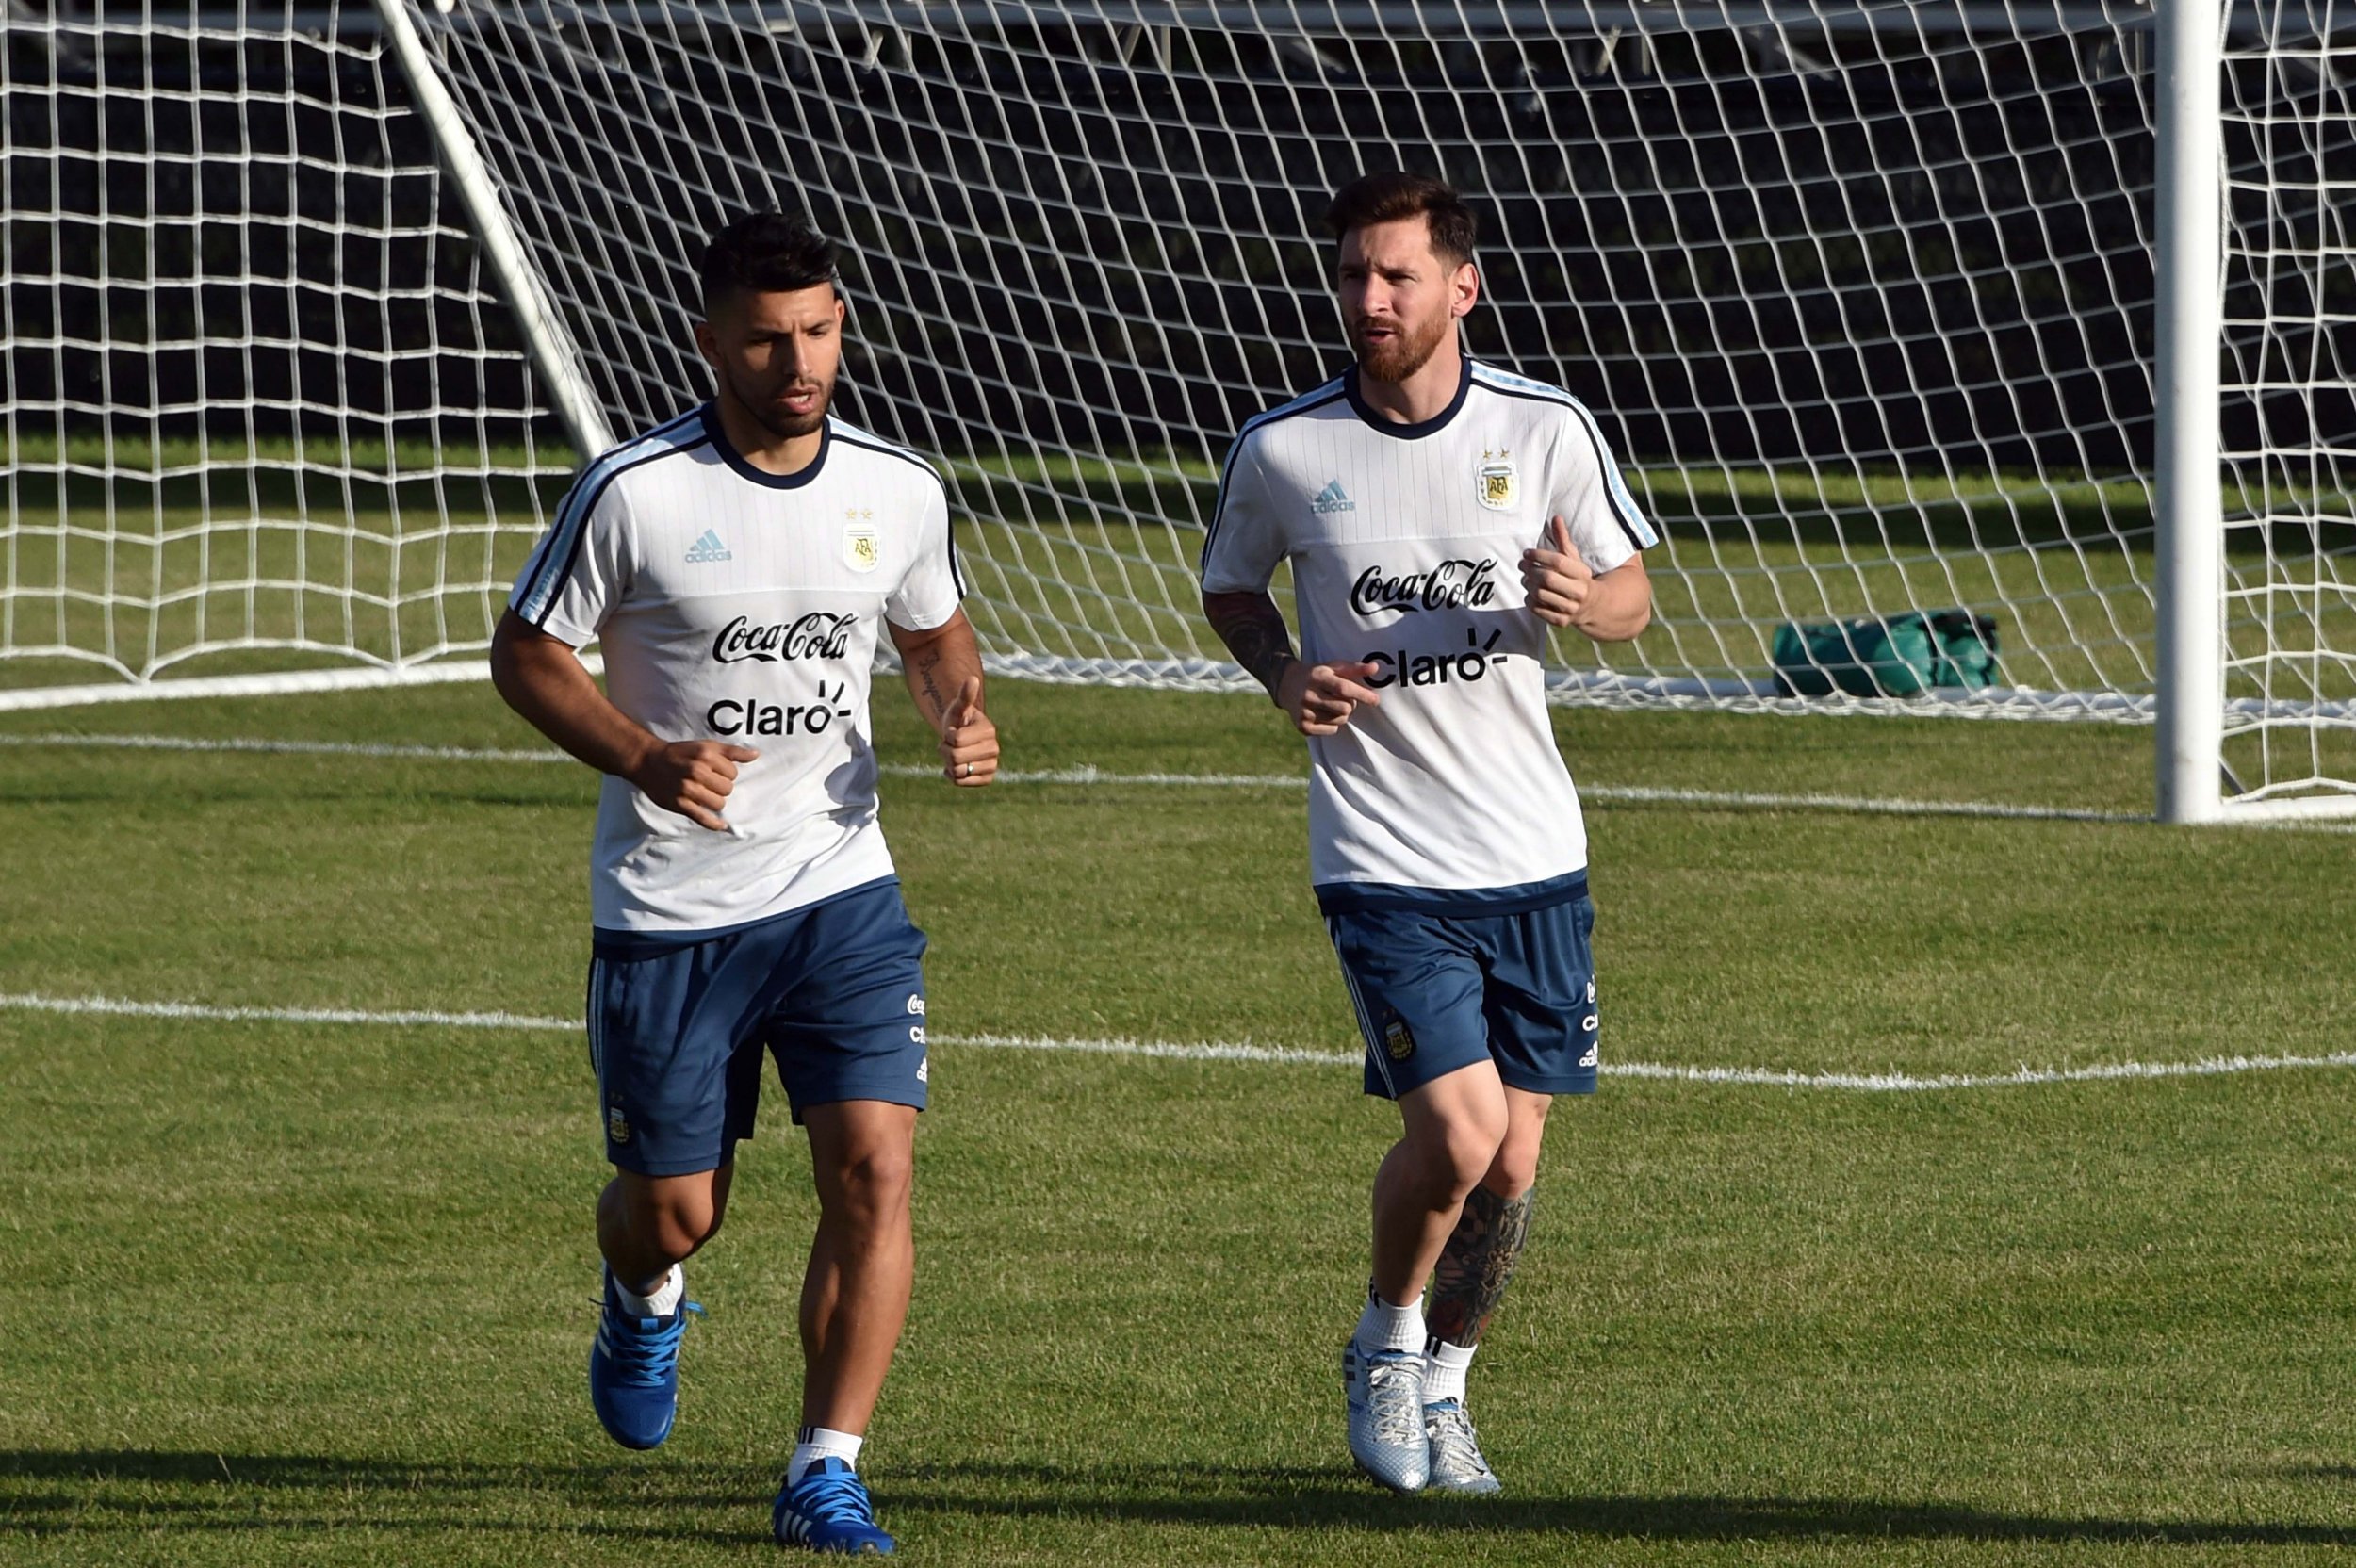 Sergio Aguero and Lionel Messi